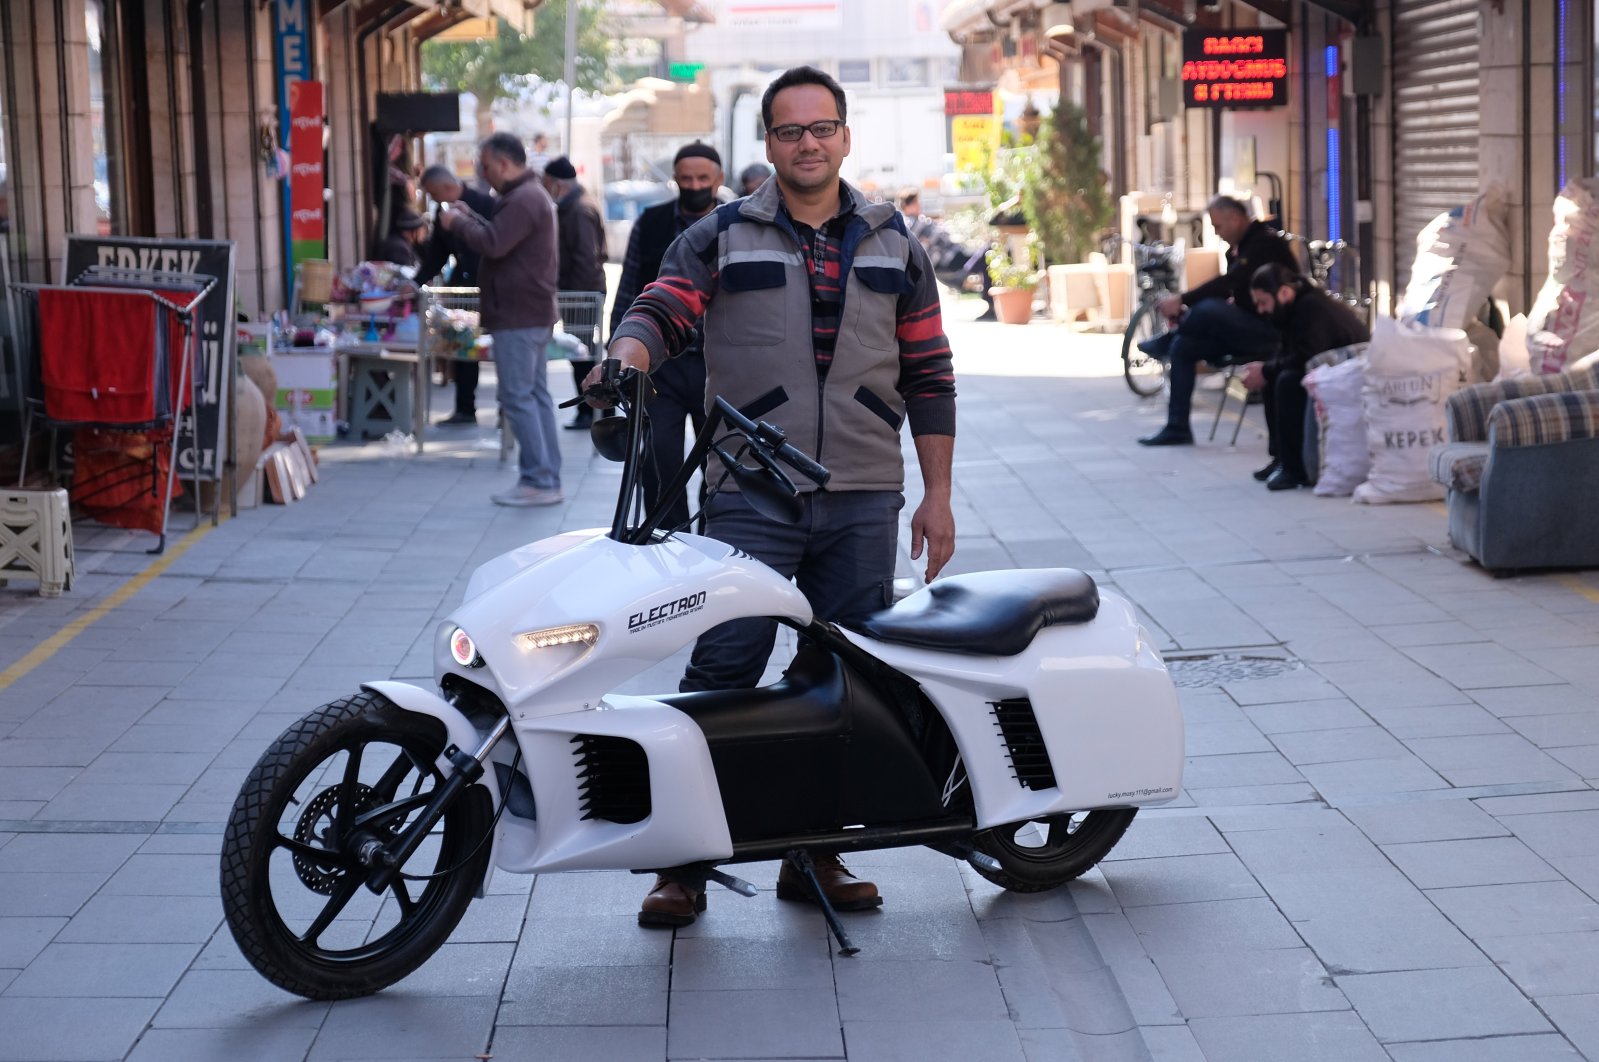 Pengungsi Afghanistan di Turki merancang dan membuat sepeda elektronik futuristik